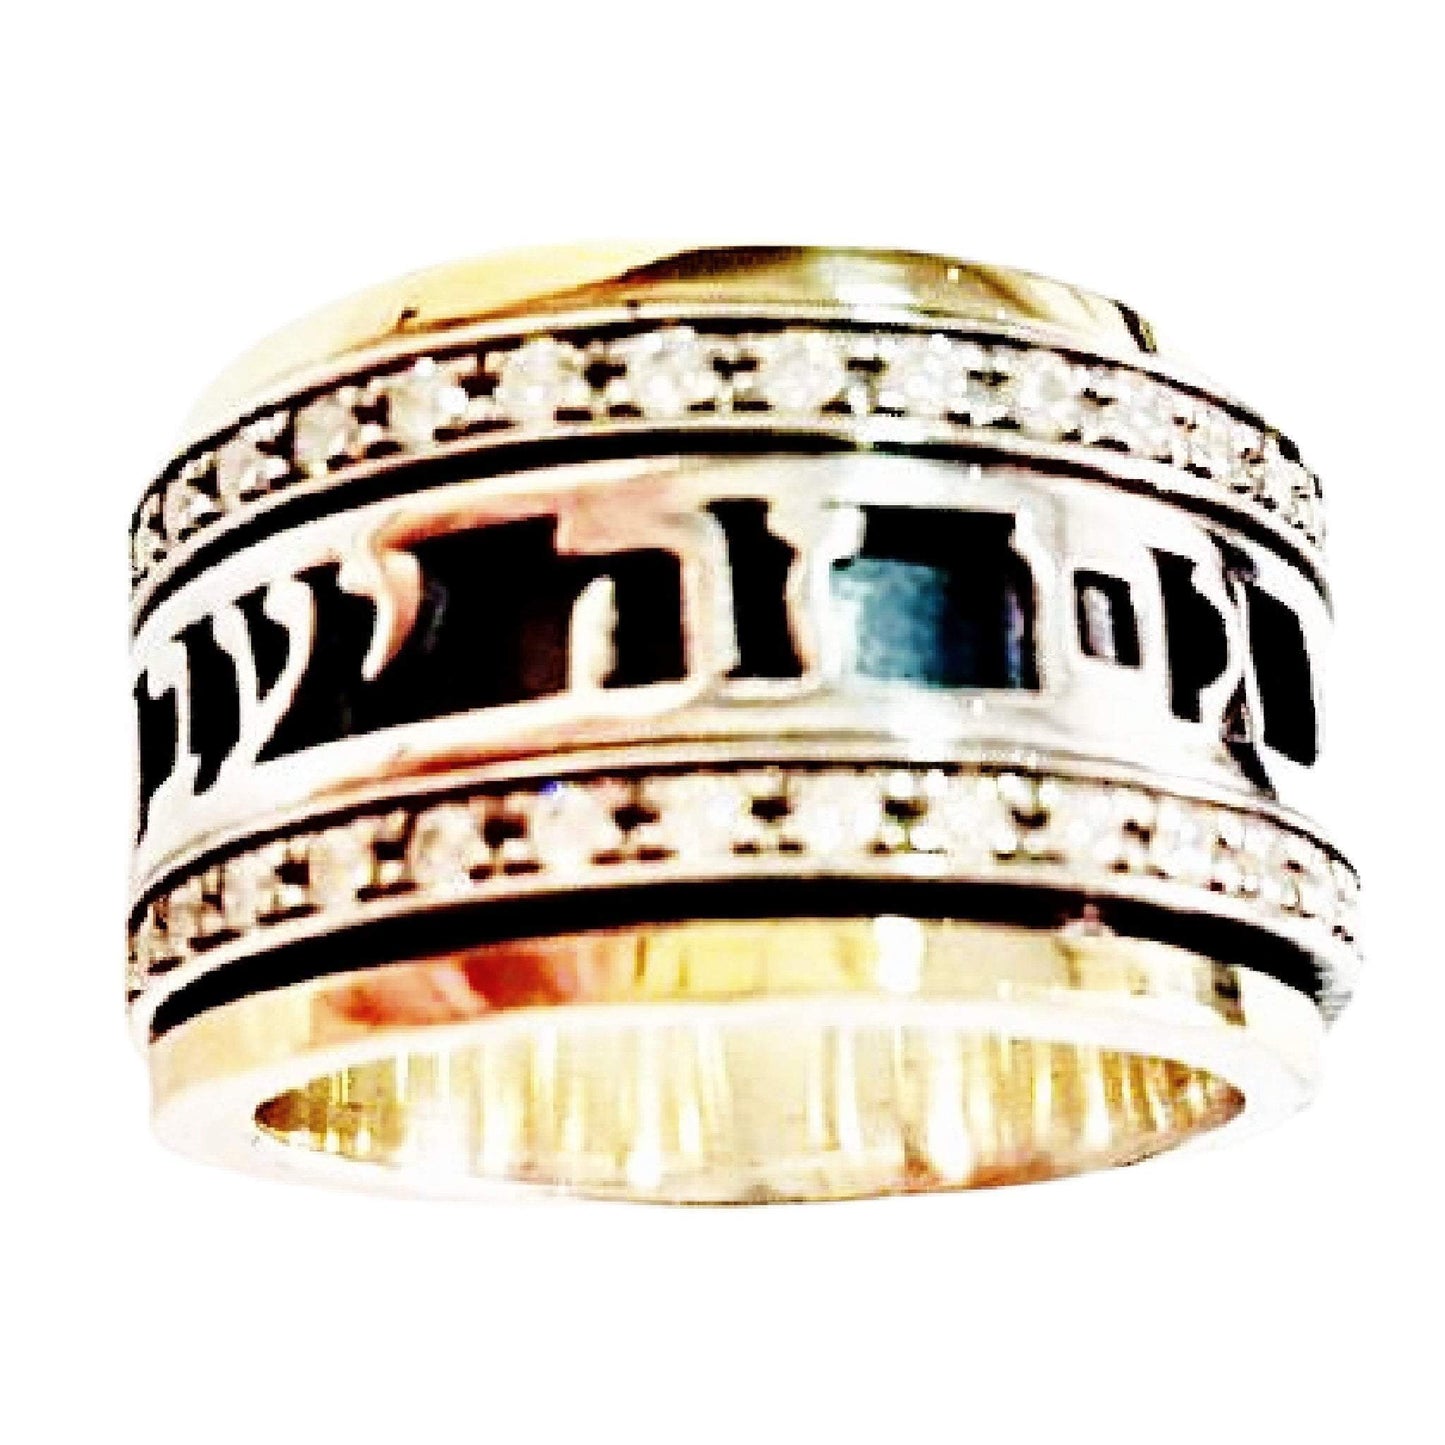 Bluenoemi Jewelry Personalized Rings Israeli jewelry designers ring Personalized Ring message Hebrew love verse ring